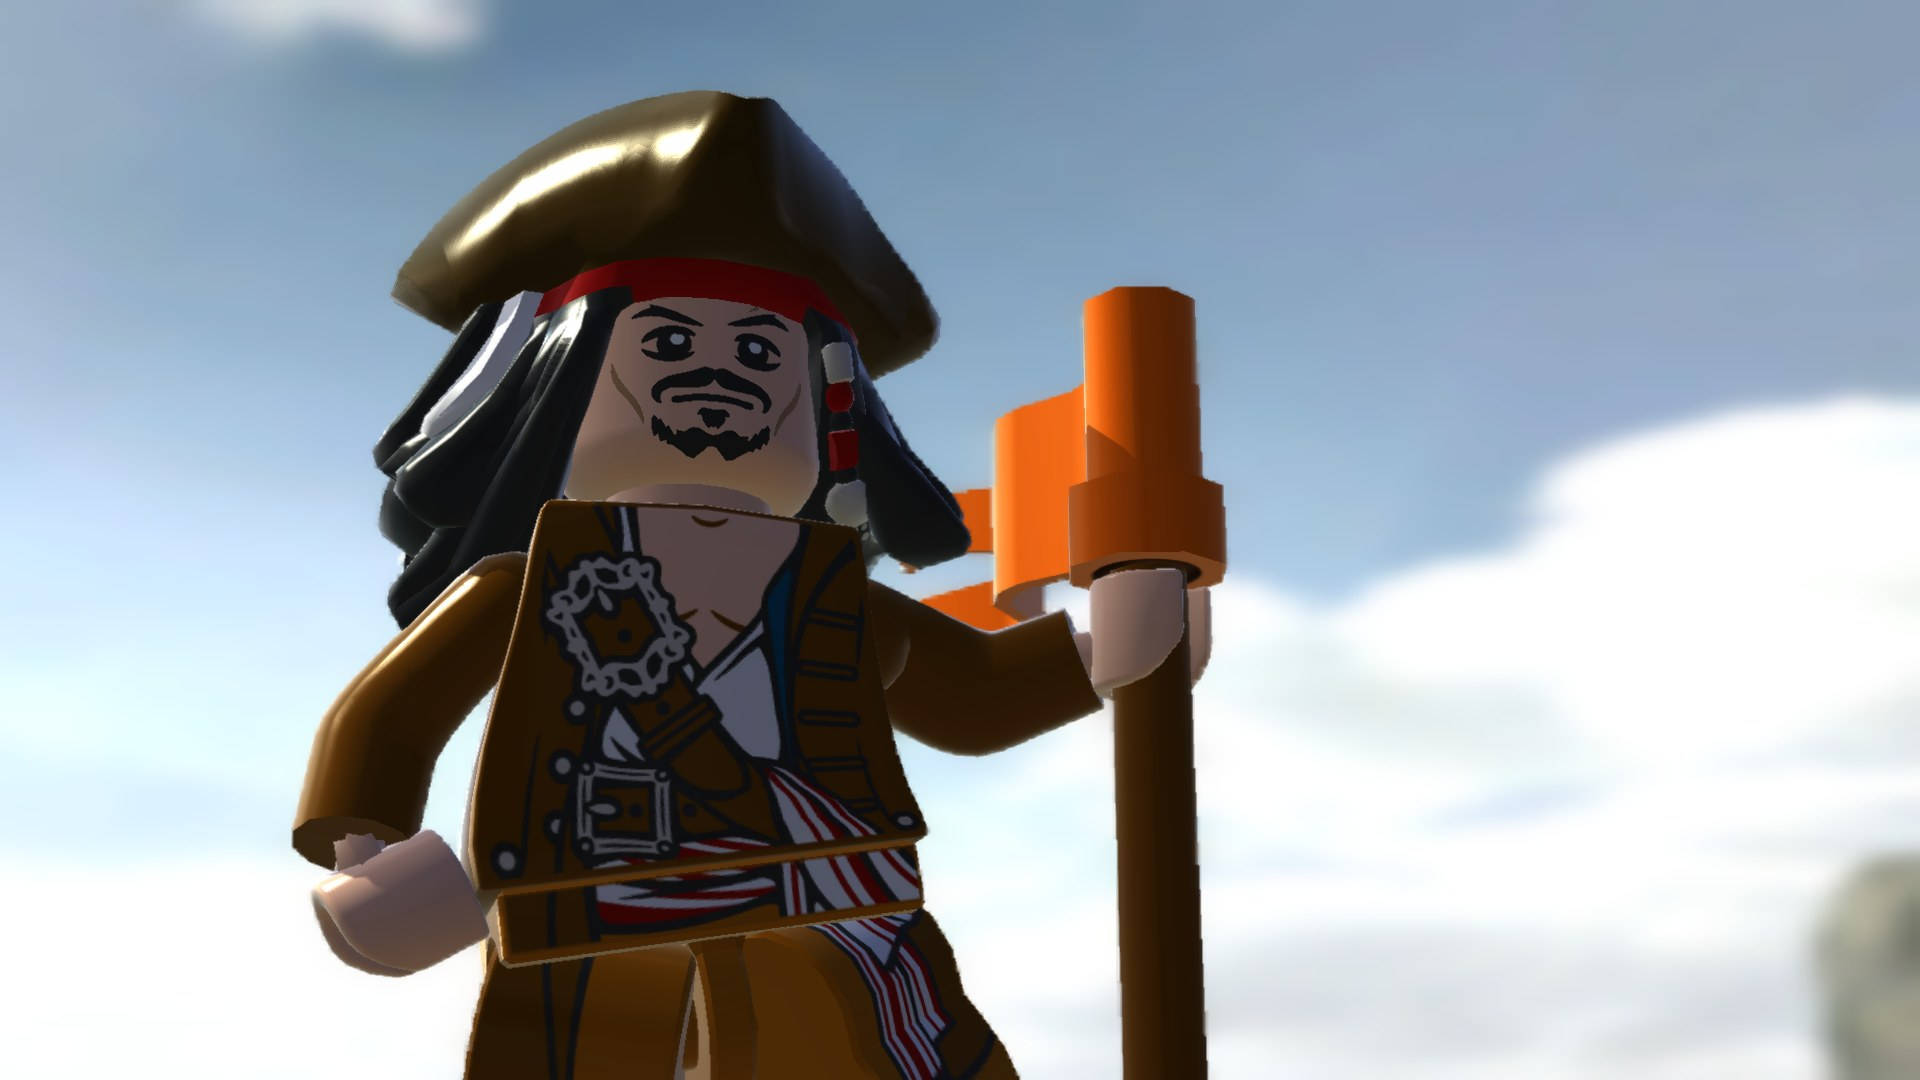 Jack Sparrow Lego Video Game Wallpaper